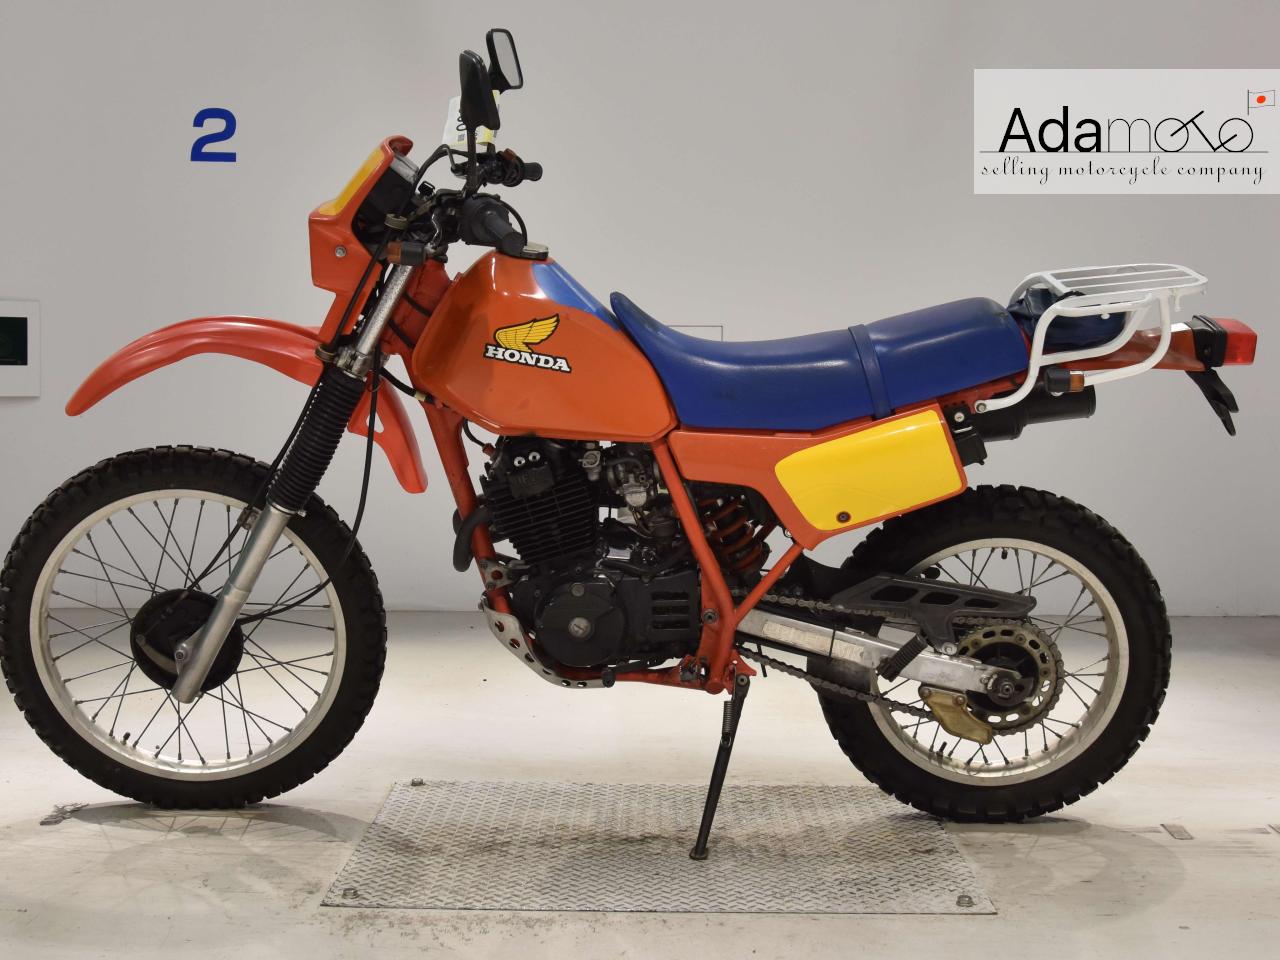 Honda XLX250R - Adamoto - Motorcycles from Japan